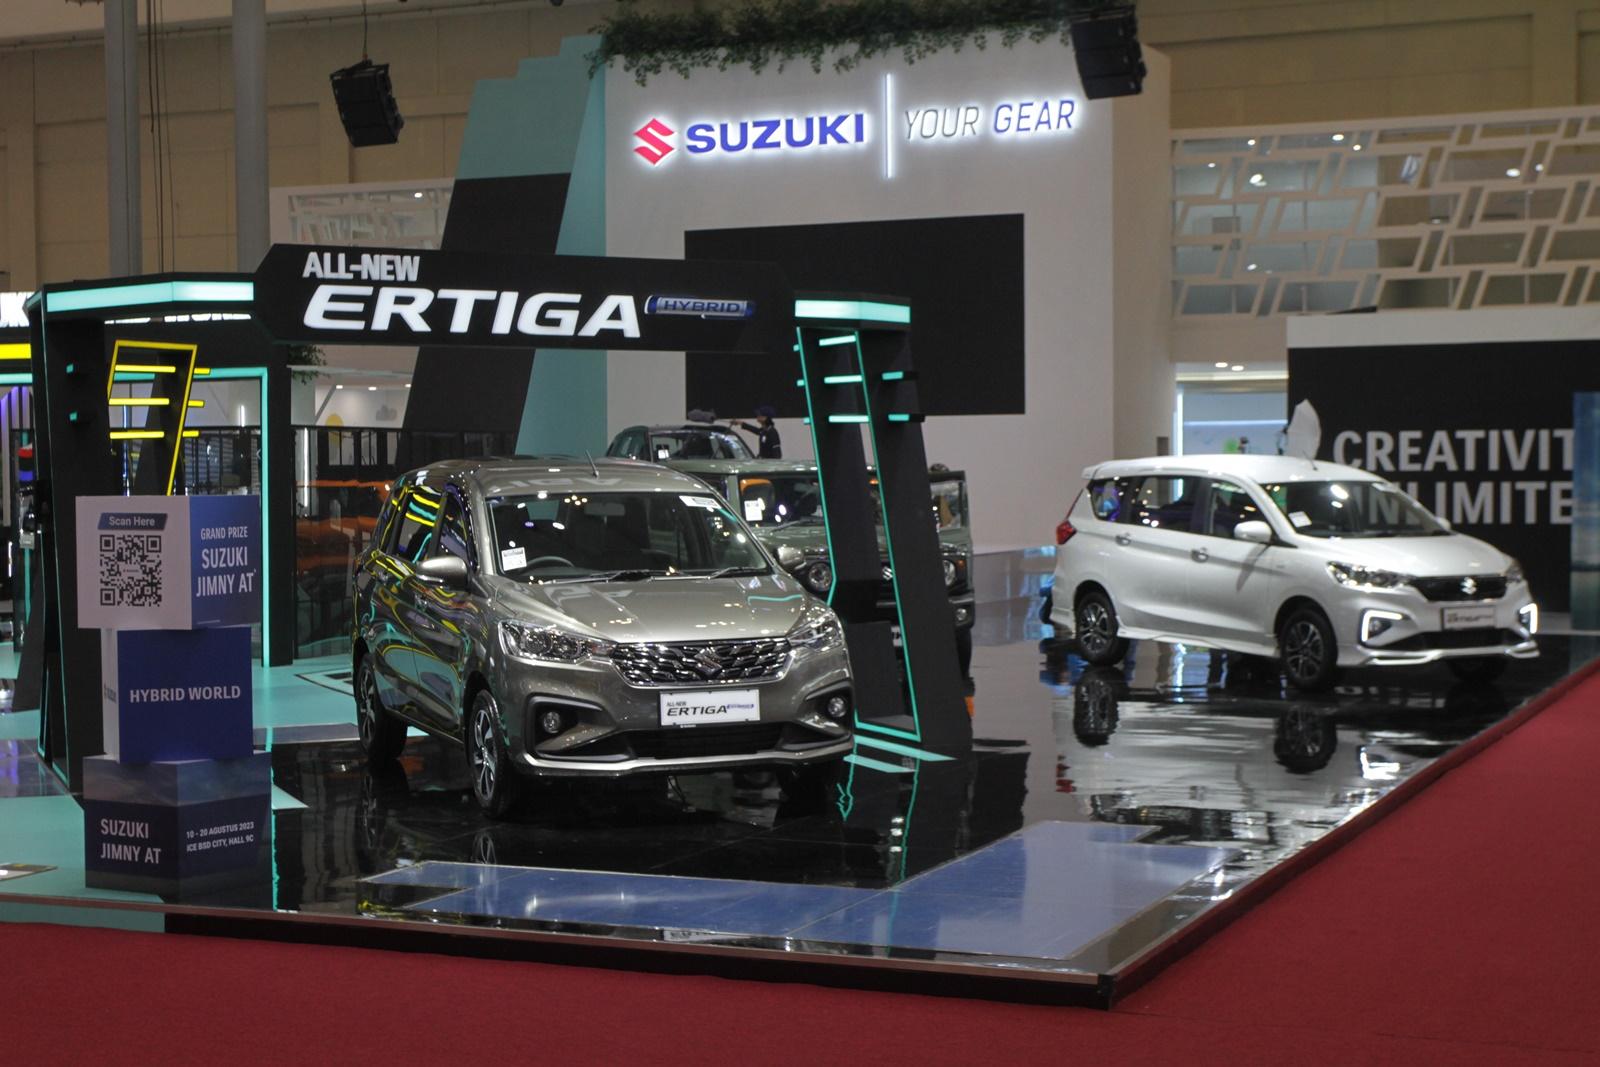 FOTO: All New Suzuki Ertiga Hybrid (ilustrasi). FOTO: DOK. SUZUKI